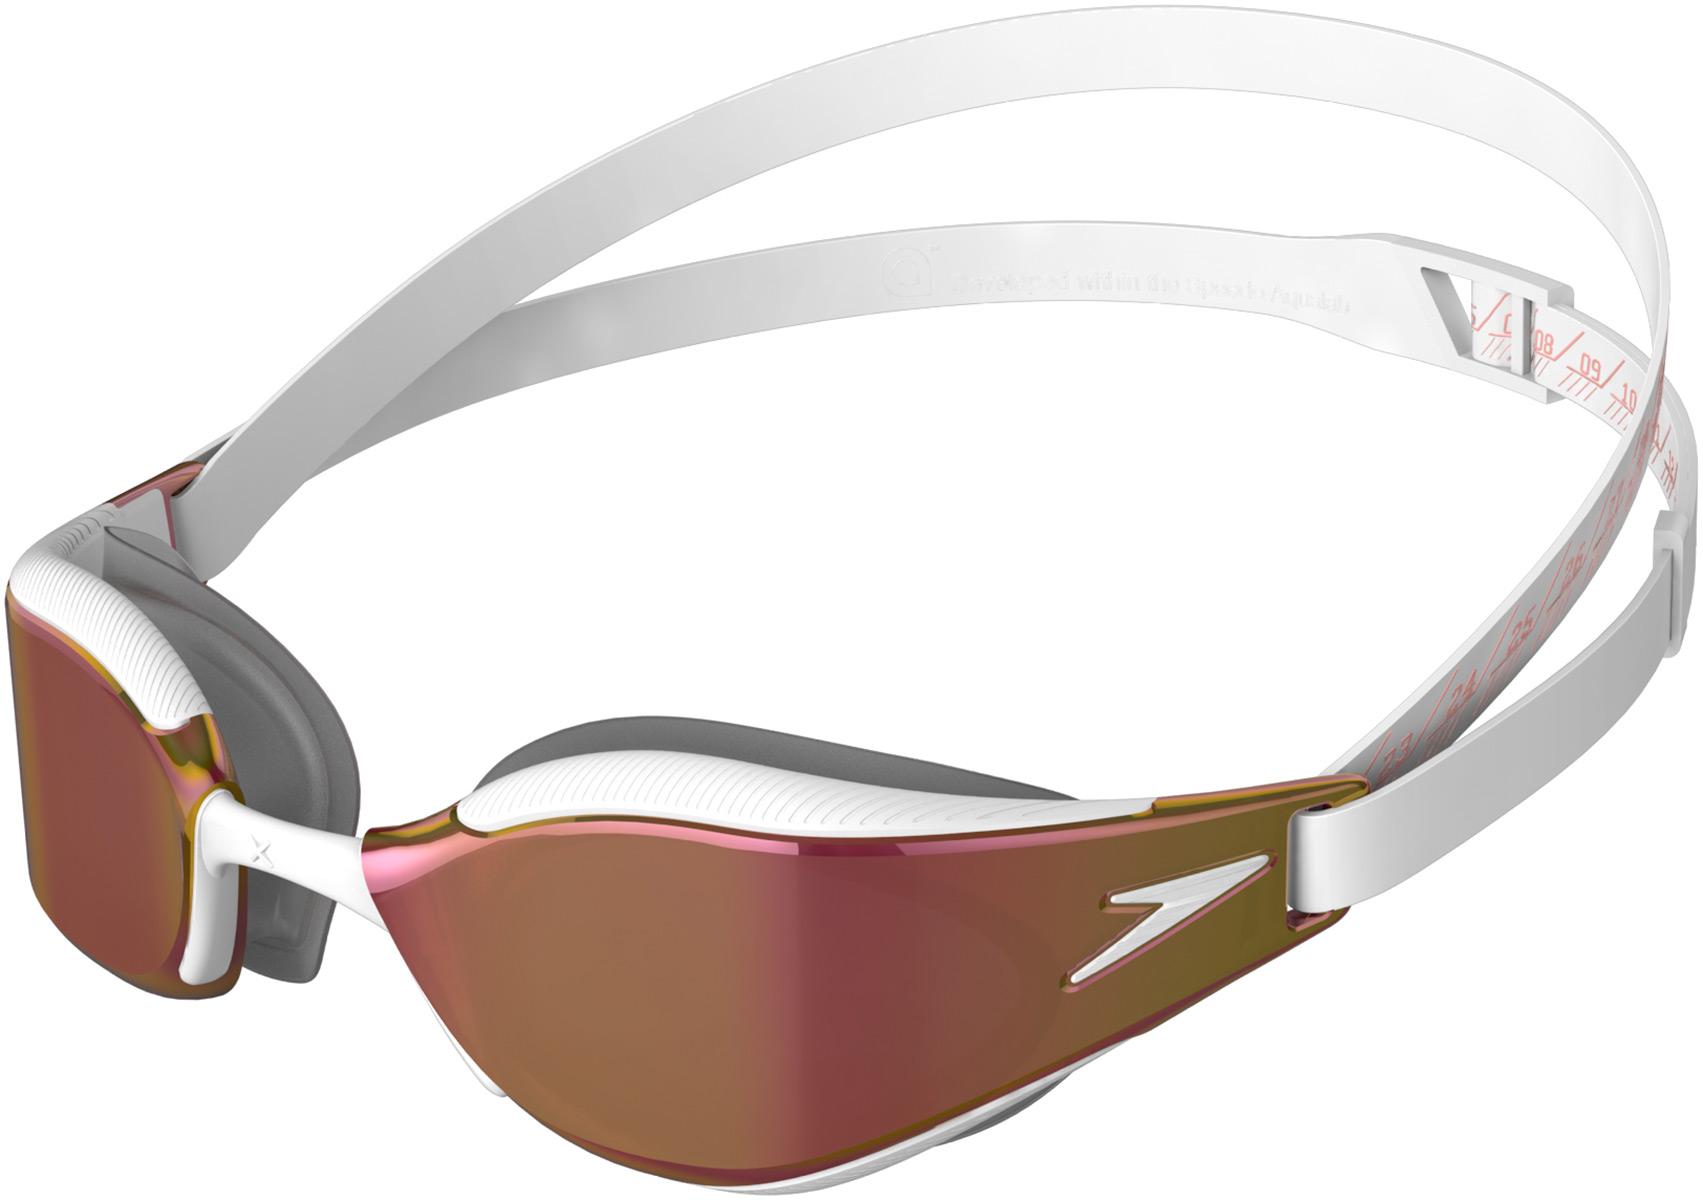 Speedo Fastskin Hyper Elite Mirror Goggles - White/oxid Grey/rose Gold